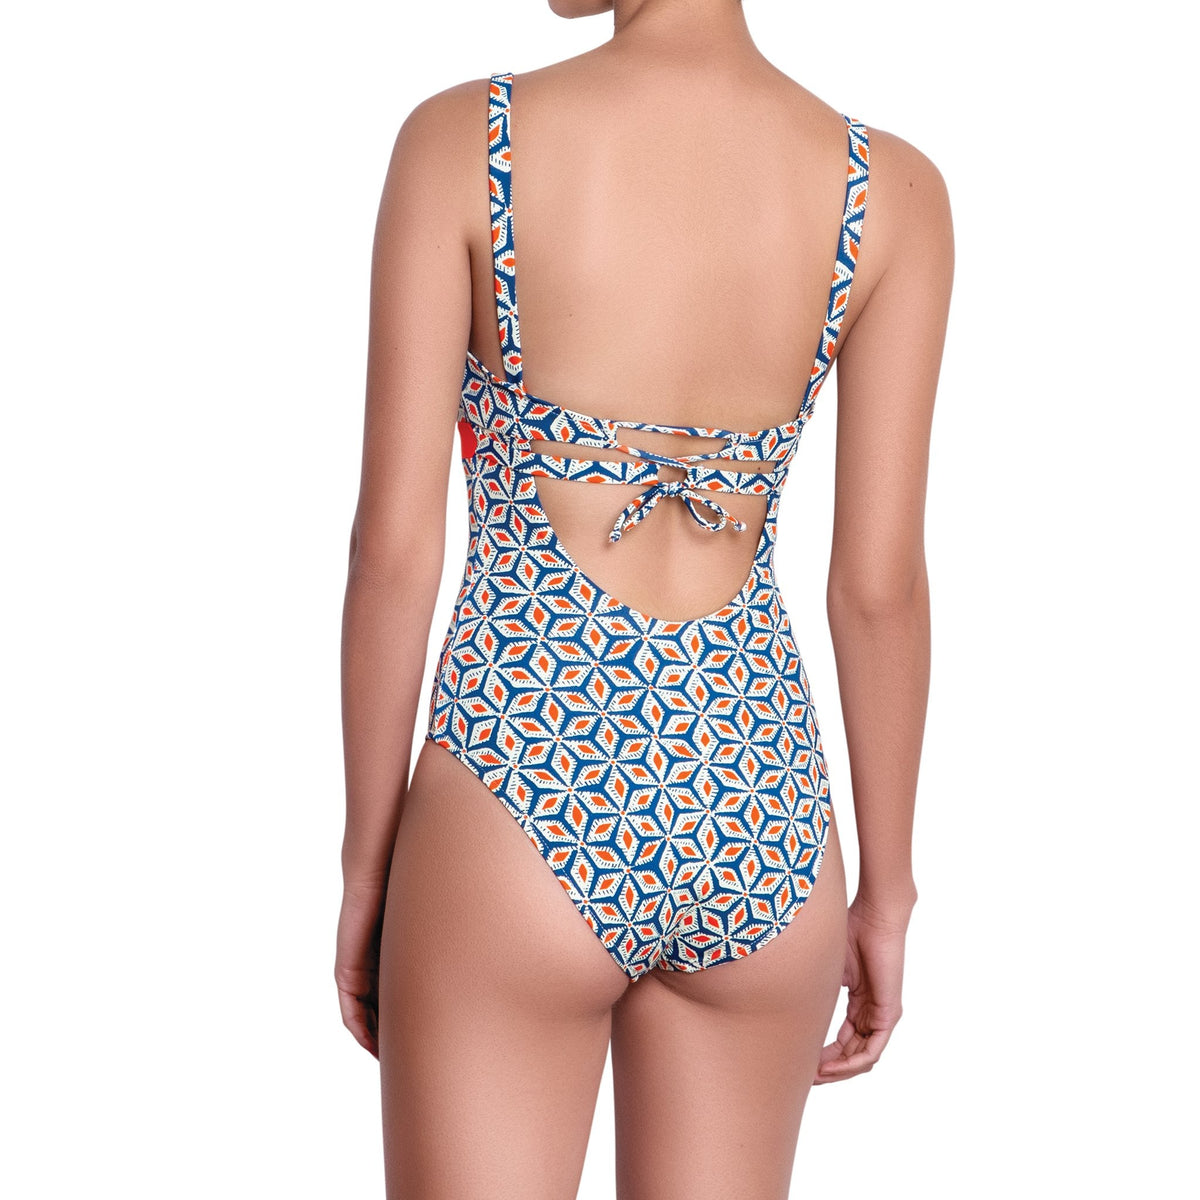 B√âR√âNICE halter one piece, printed swimsuit by ALMA swimwear ‚Äì back  view 